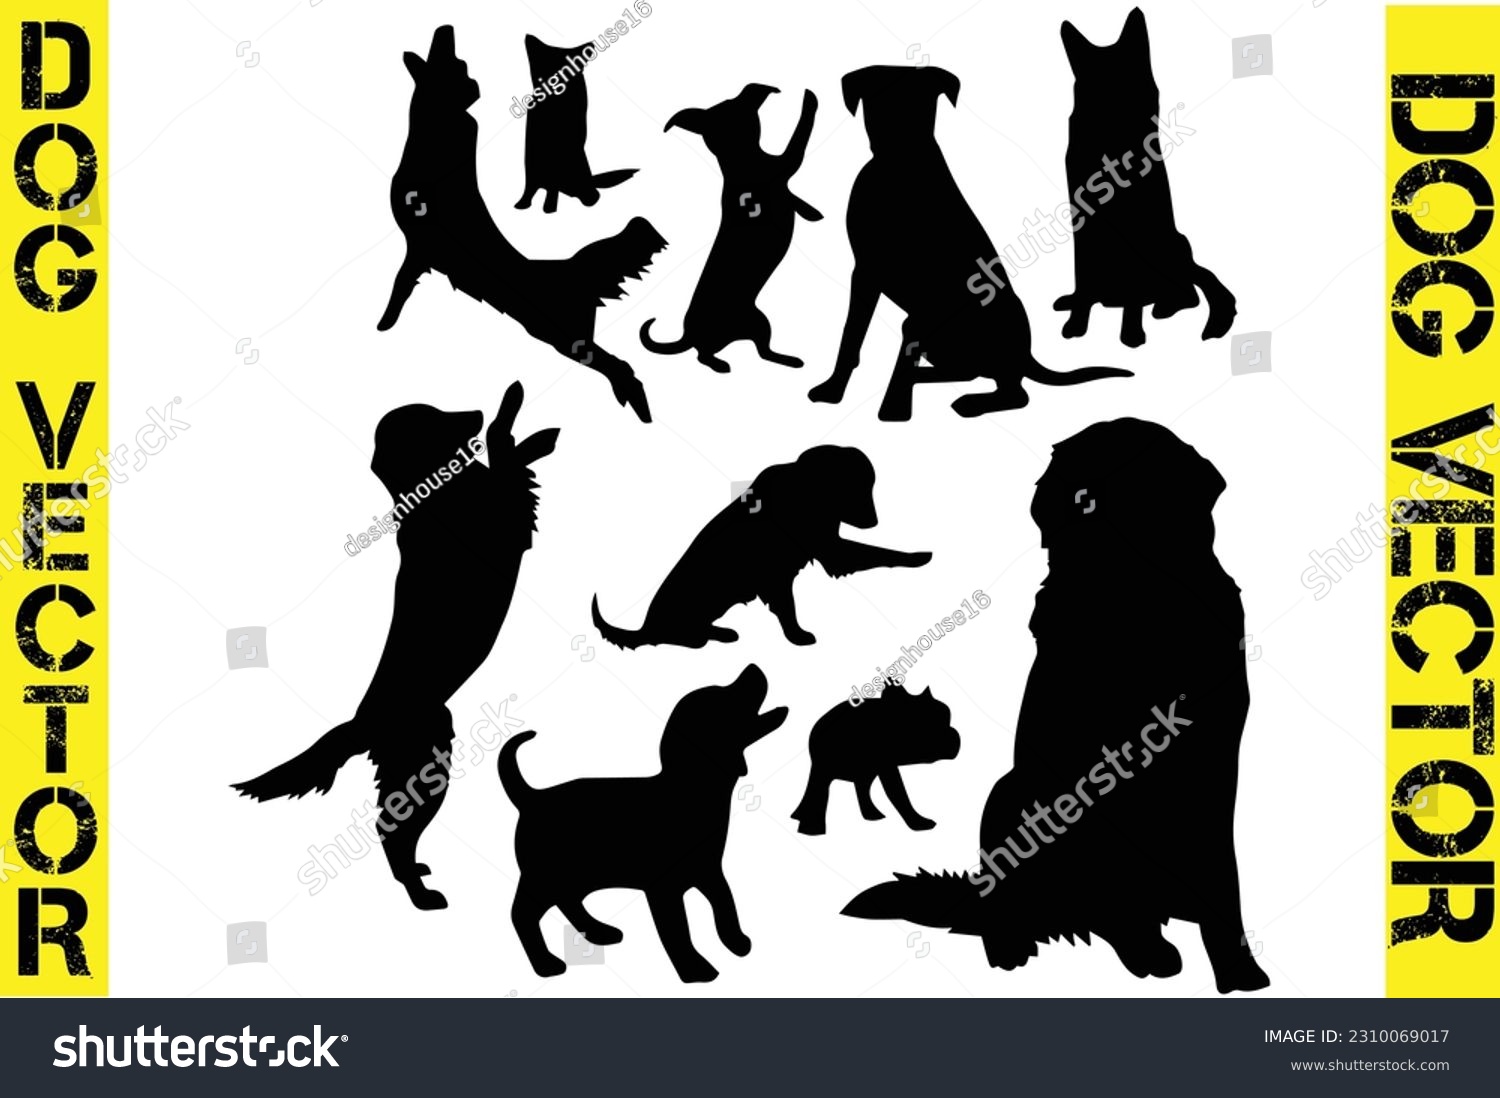 SVG of Dog breeds vector image,
Dog silhouettes vector image,
Animal running silhouettes image,
Animal silhouettes vector,
Dog pet animal silhouette vector image,
Dog paw prints icons set svg